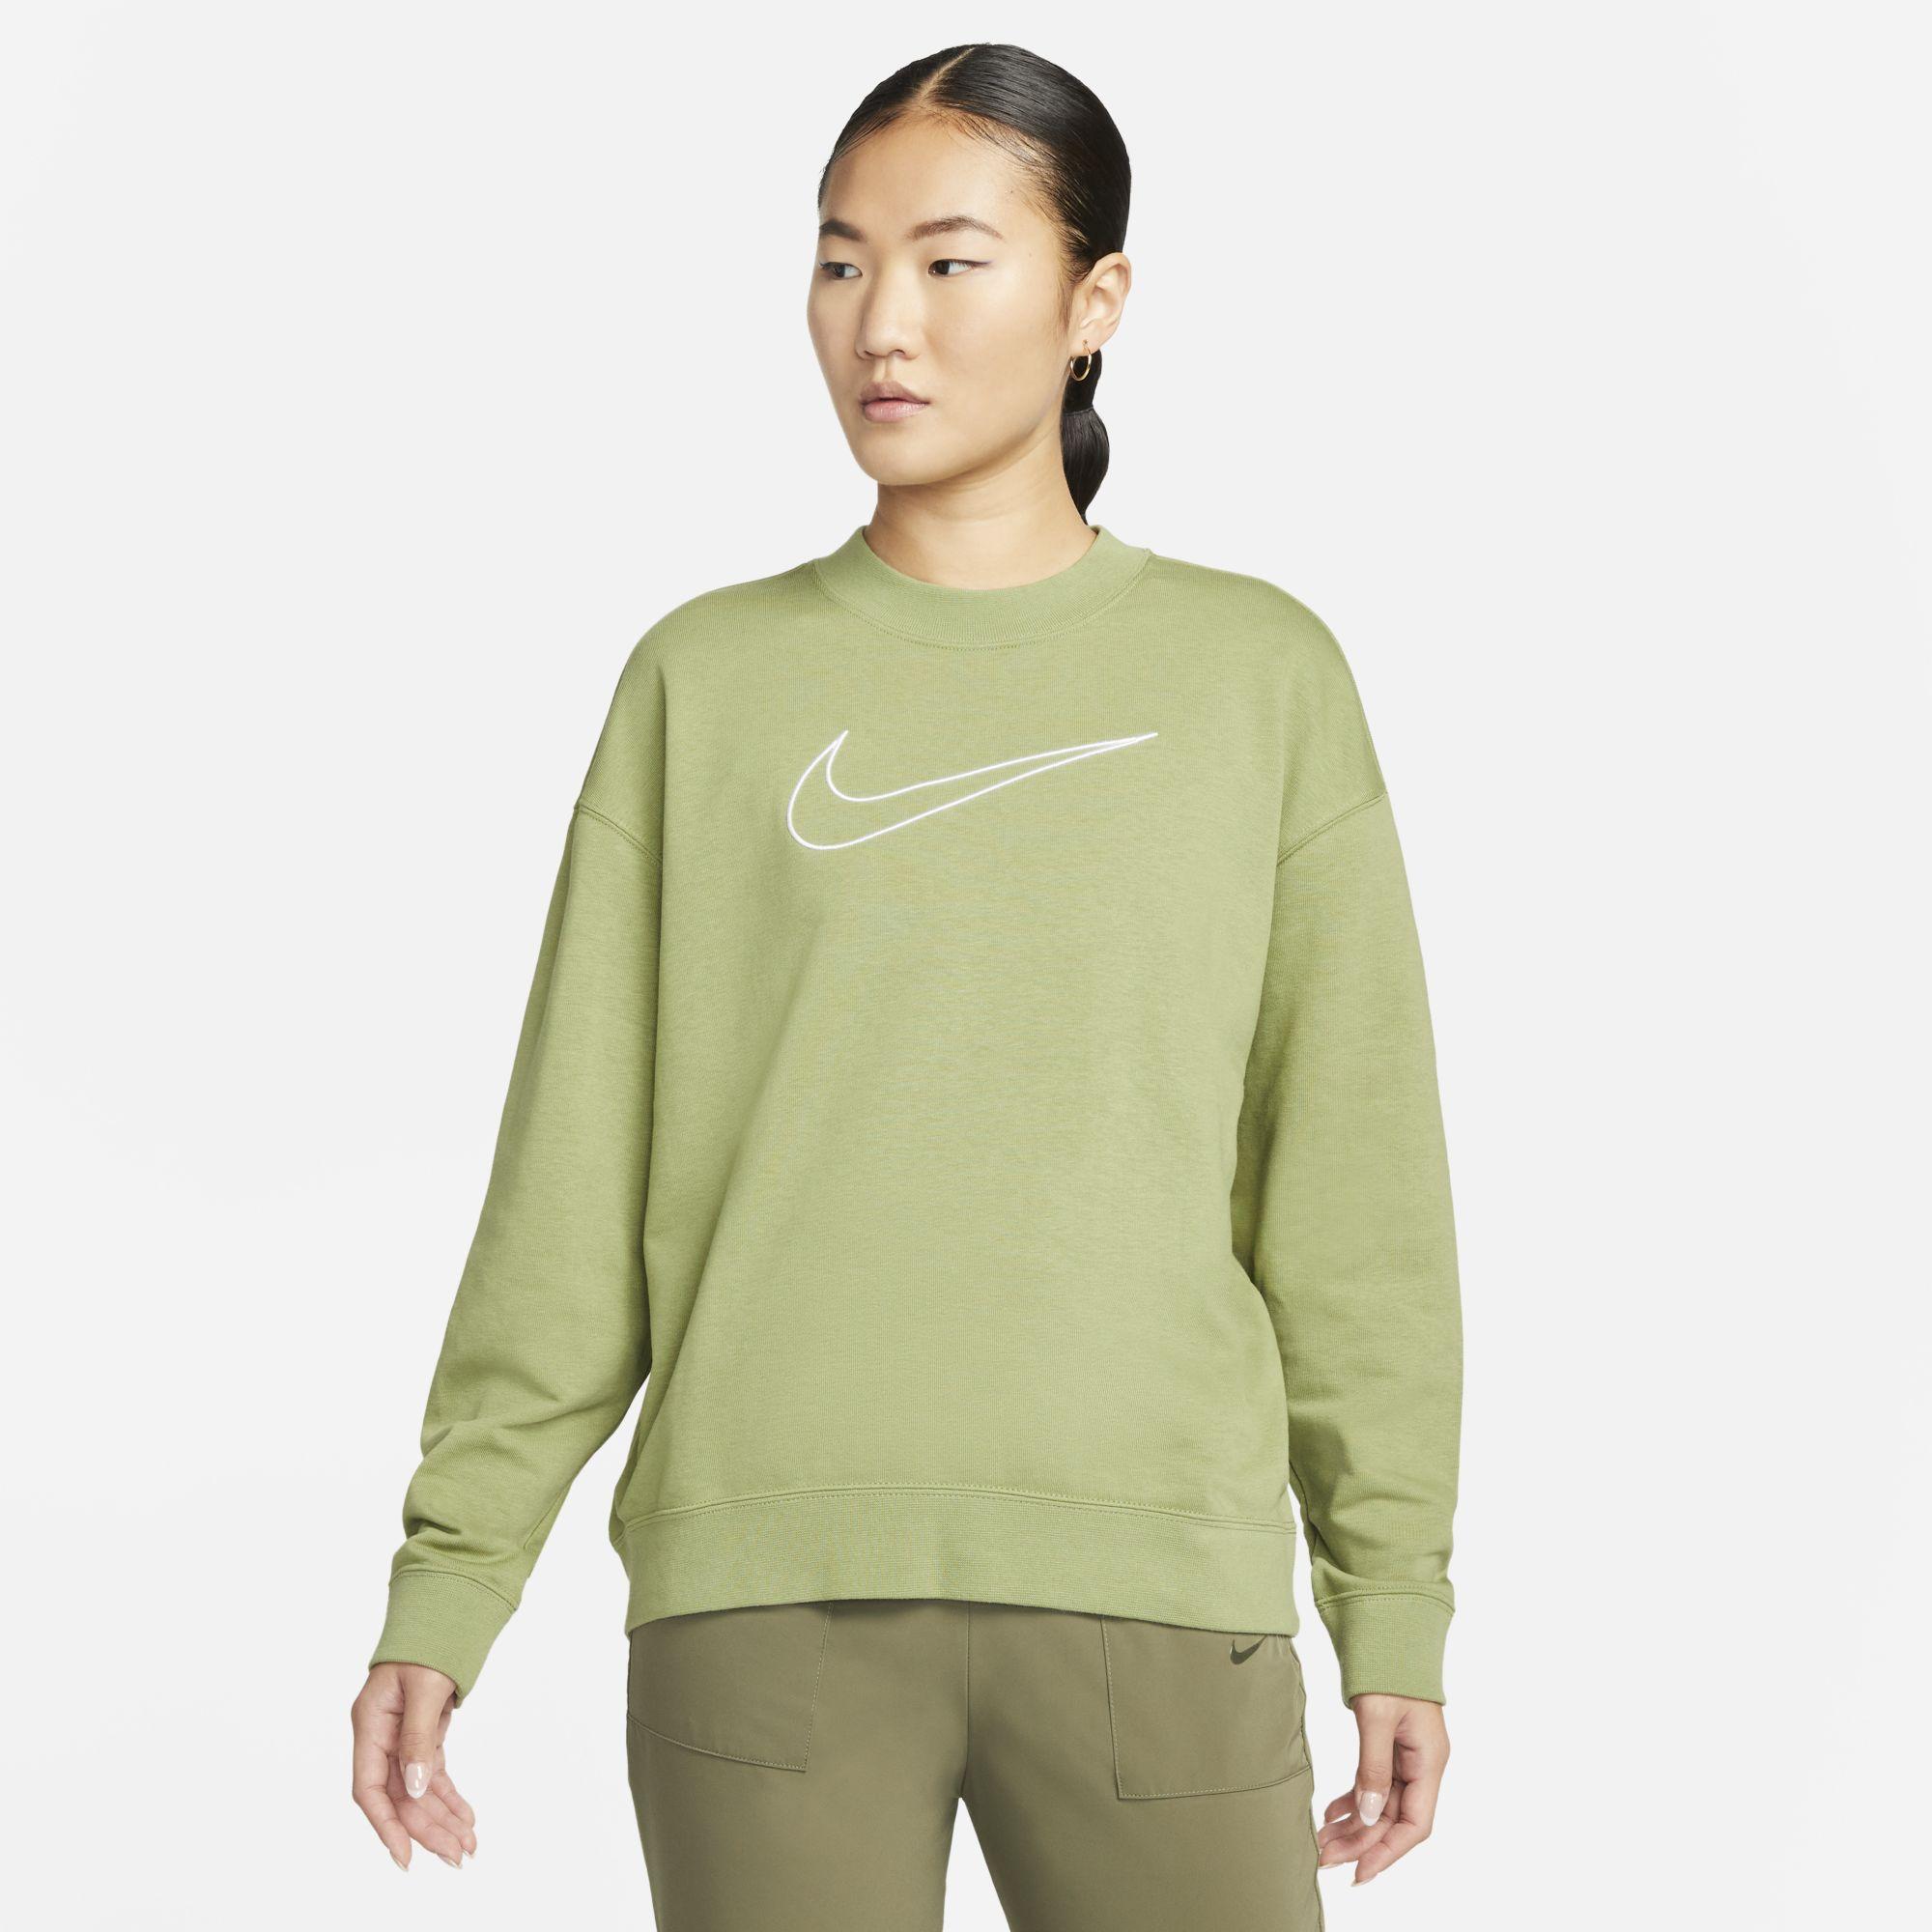 Nike Dri-fit Get Fit Graphic Crewneck Sweatshirt in Green | Lyst